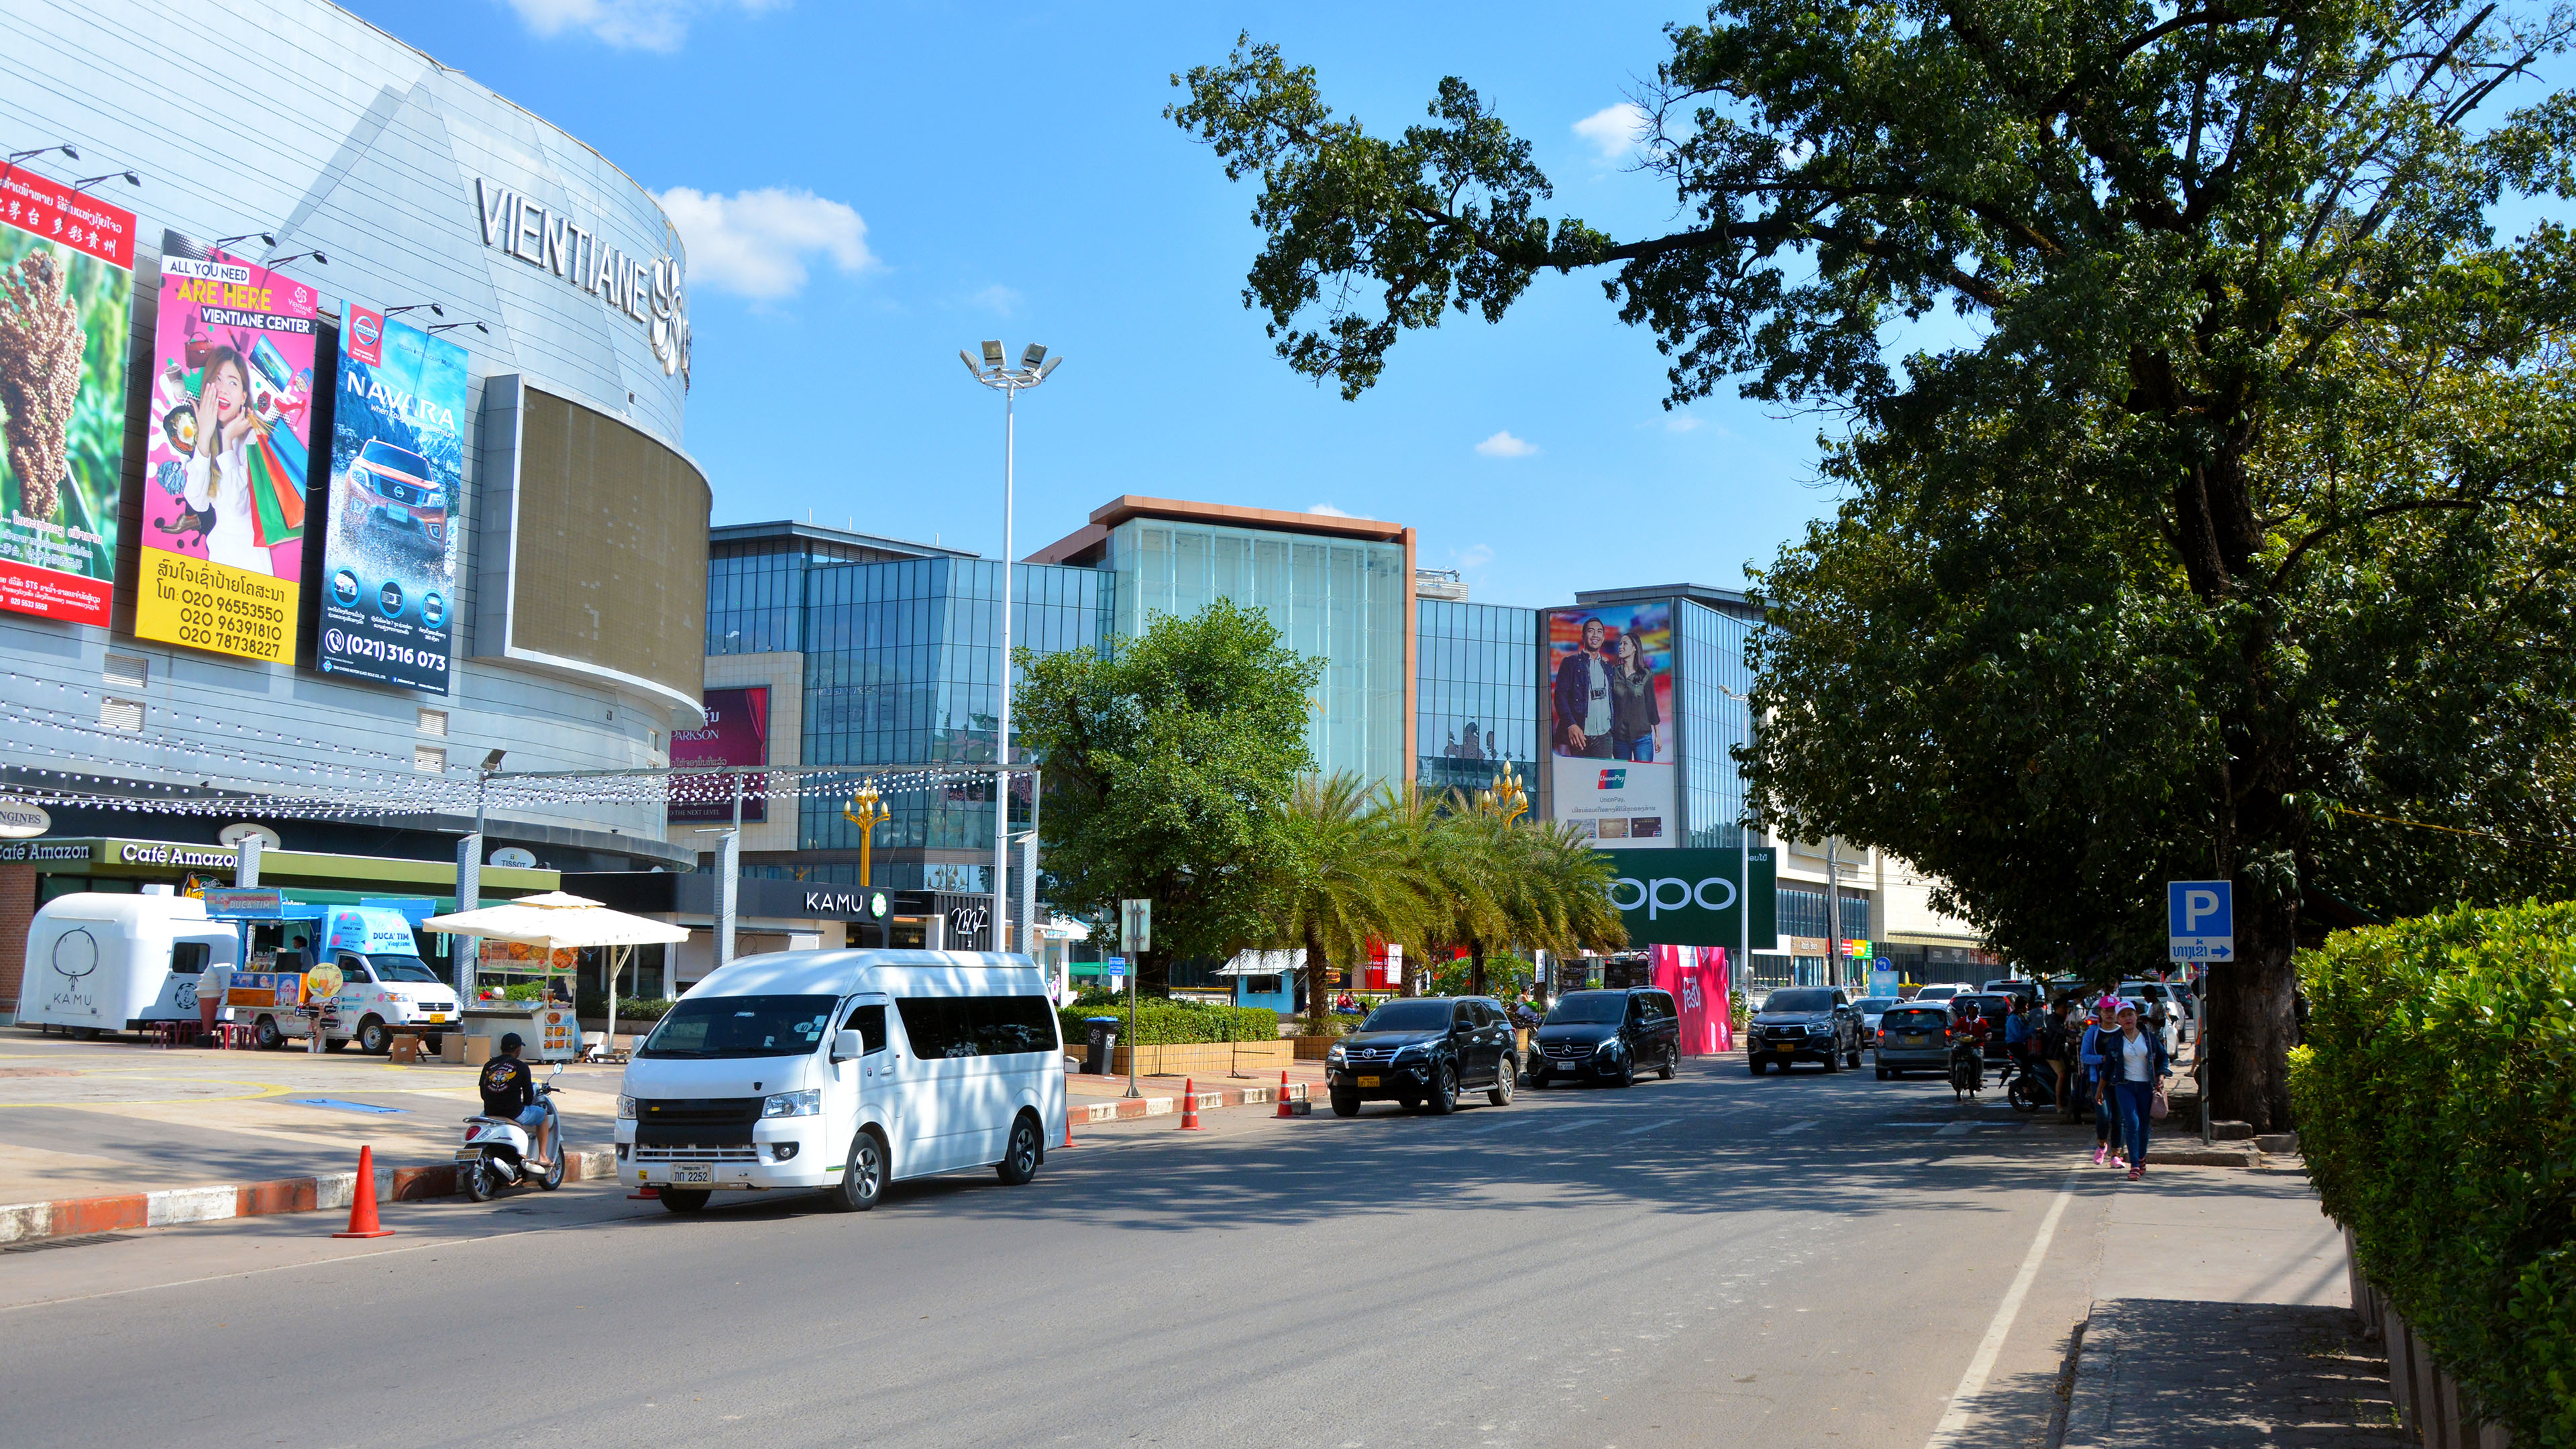 Vientiane Center and Naga Mall